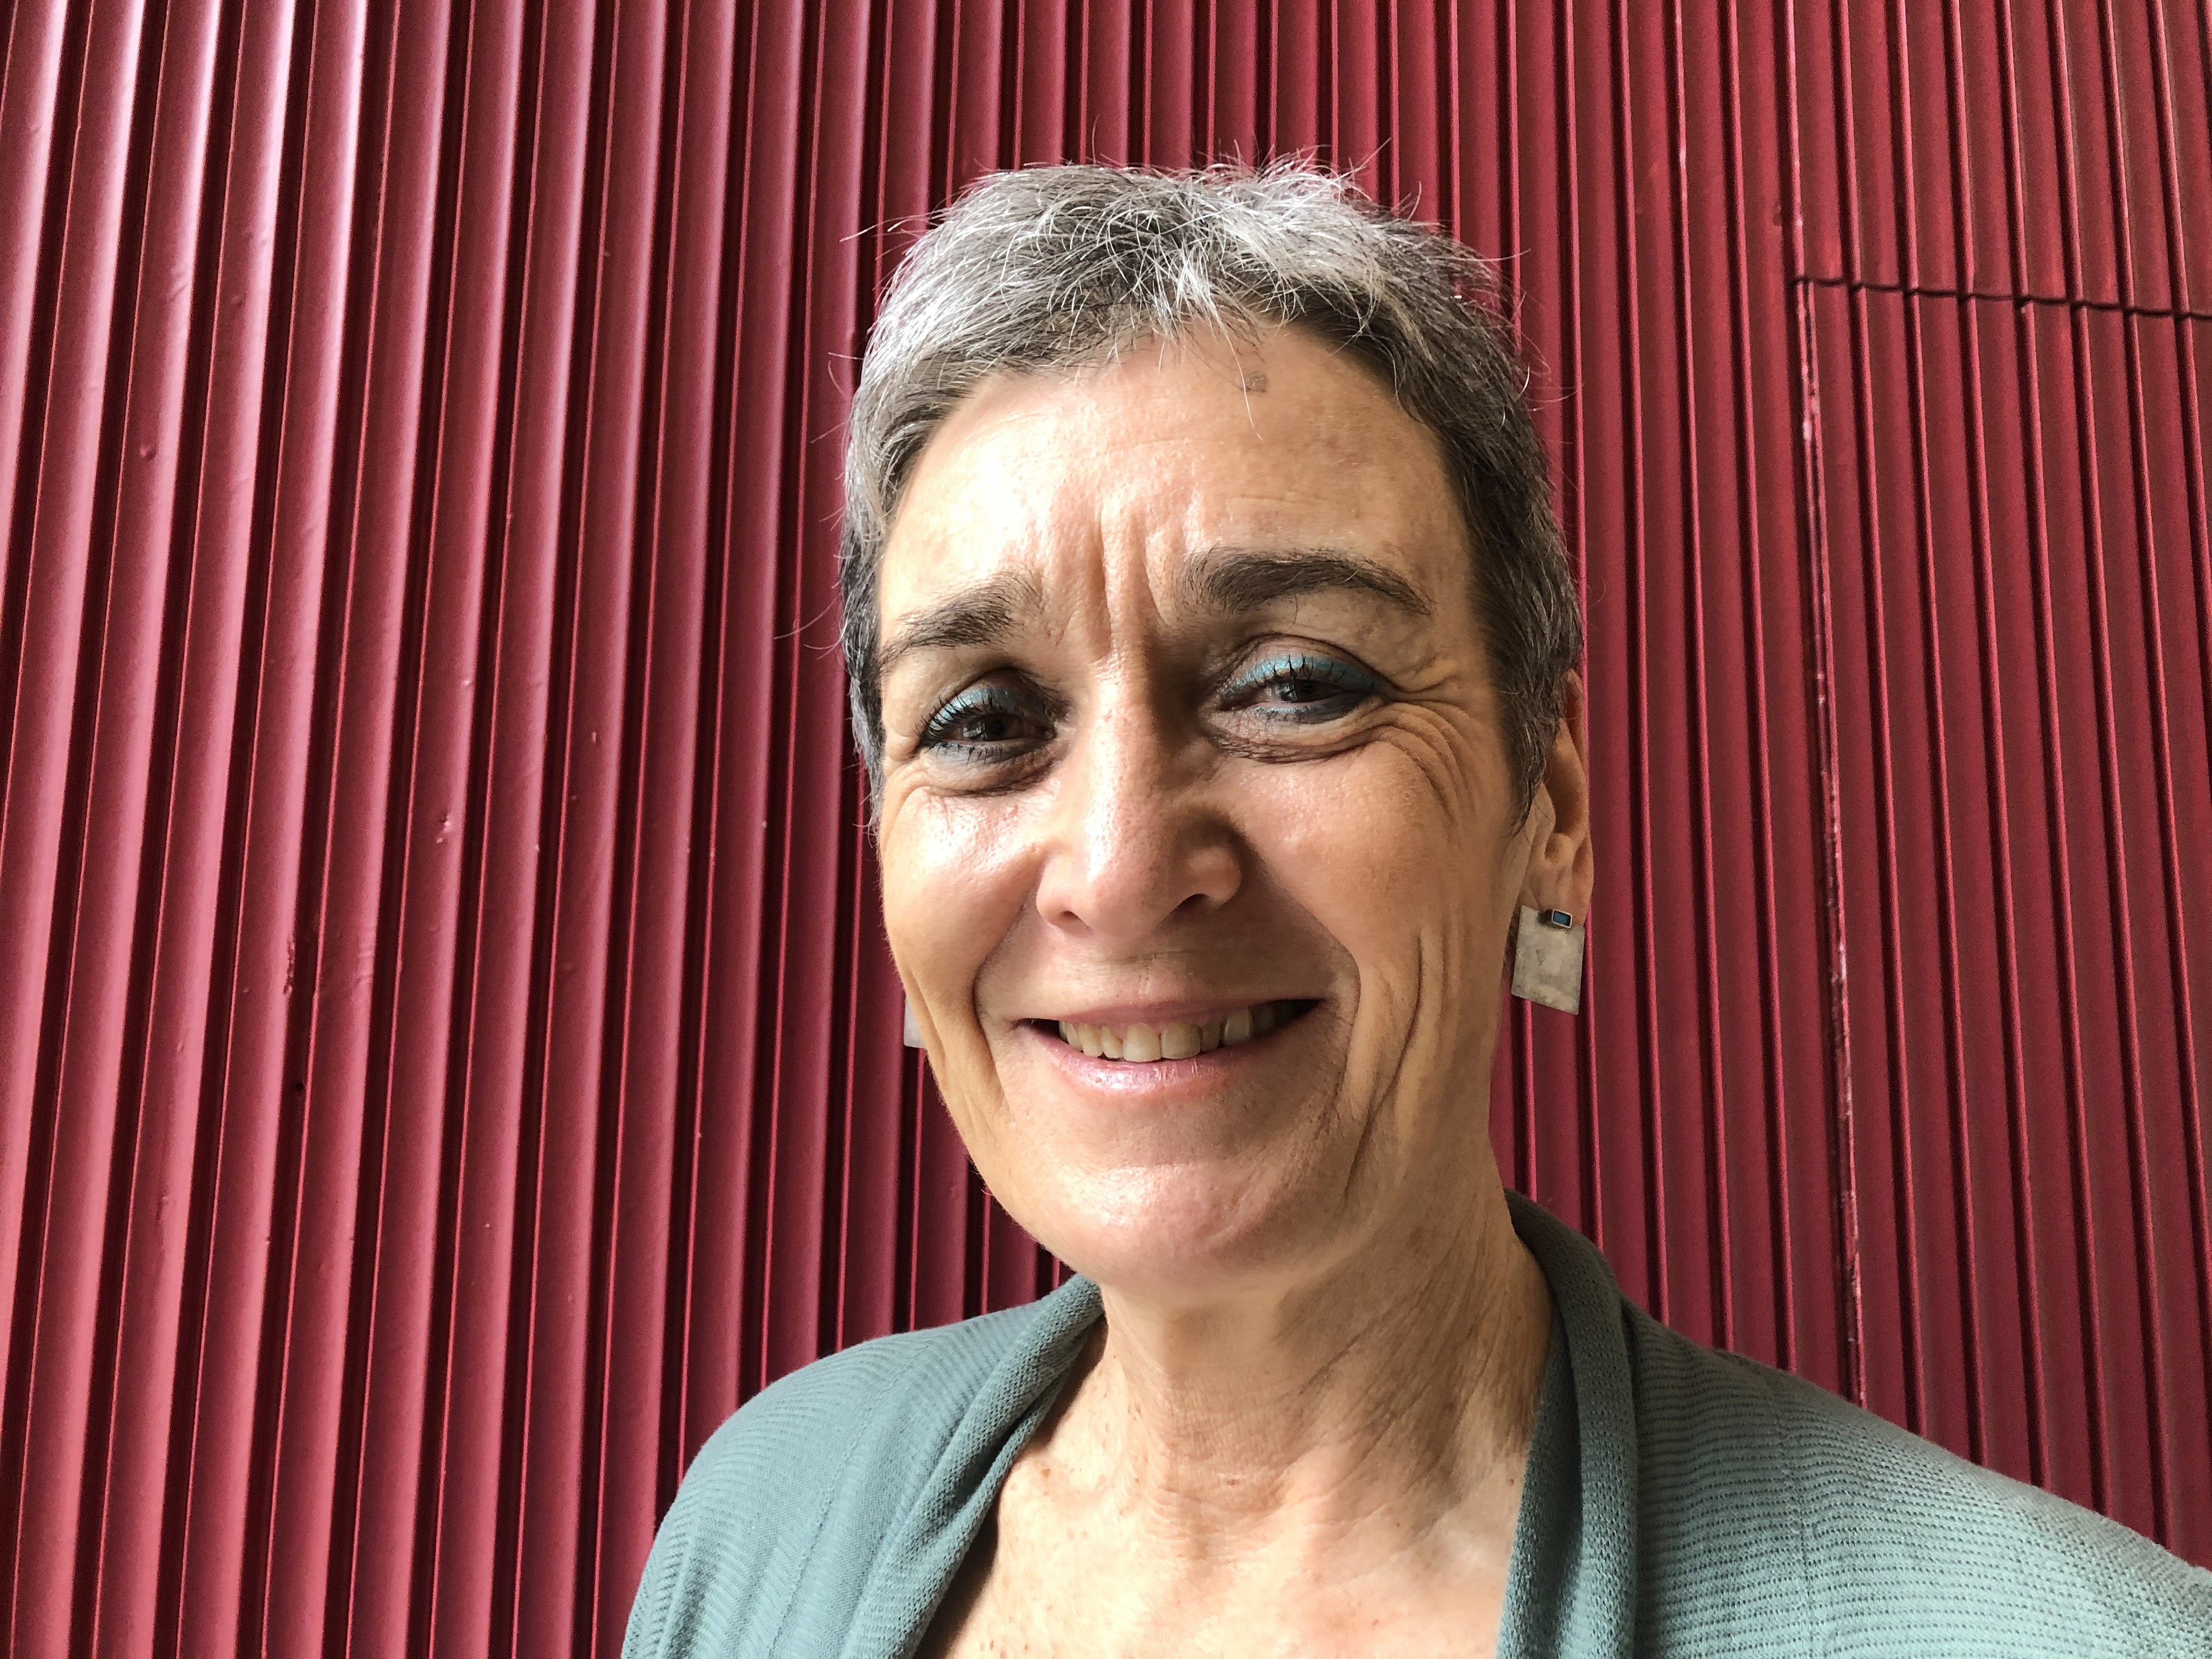 Ulrike Lunacek, Green Party minister in Austria's coalition